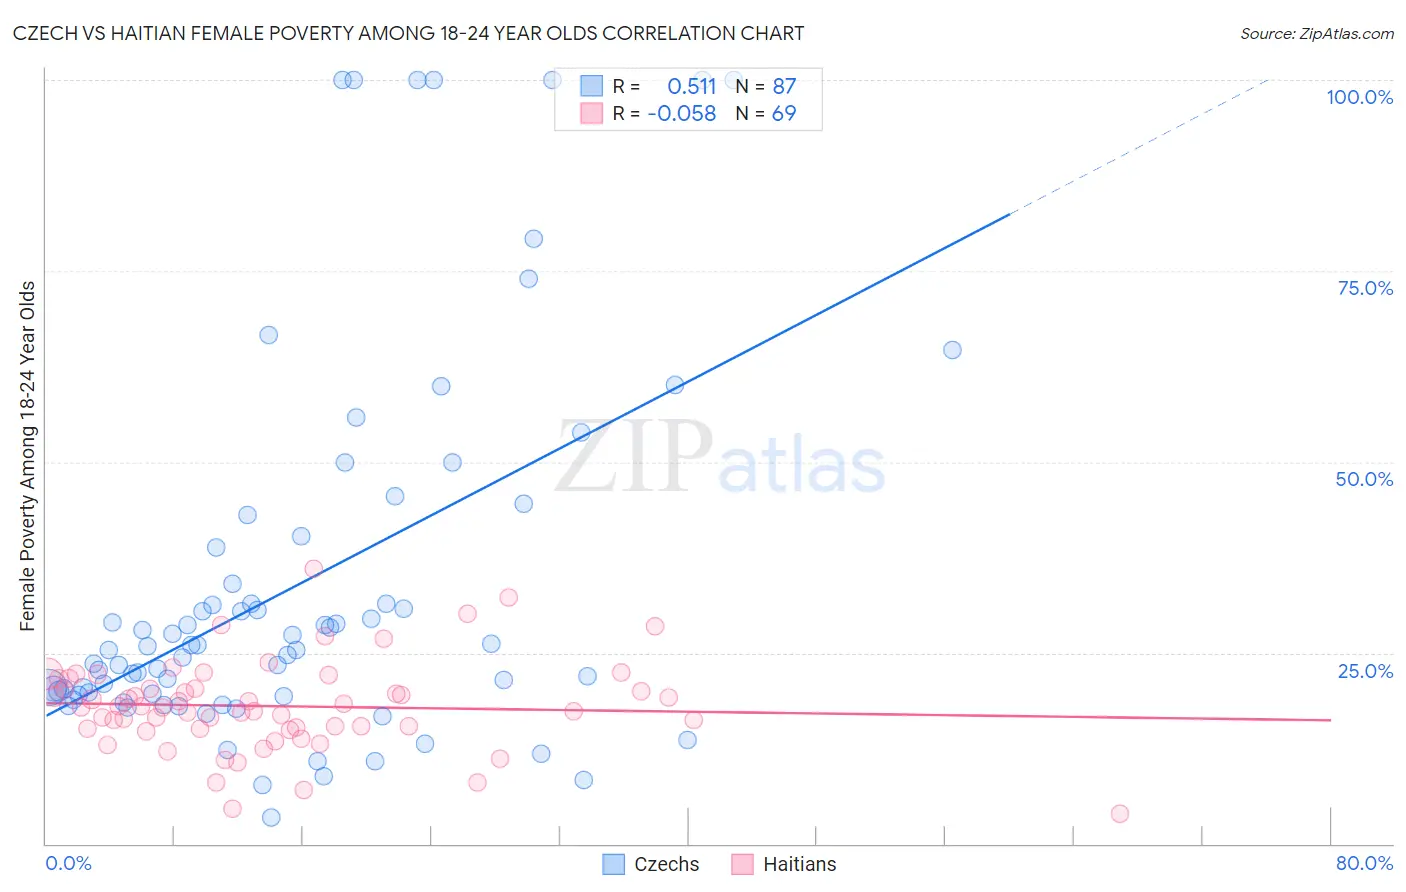 Czech vs Haitian Female Poverty Among 18-24 Year Olds